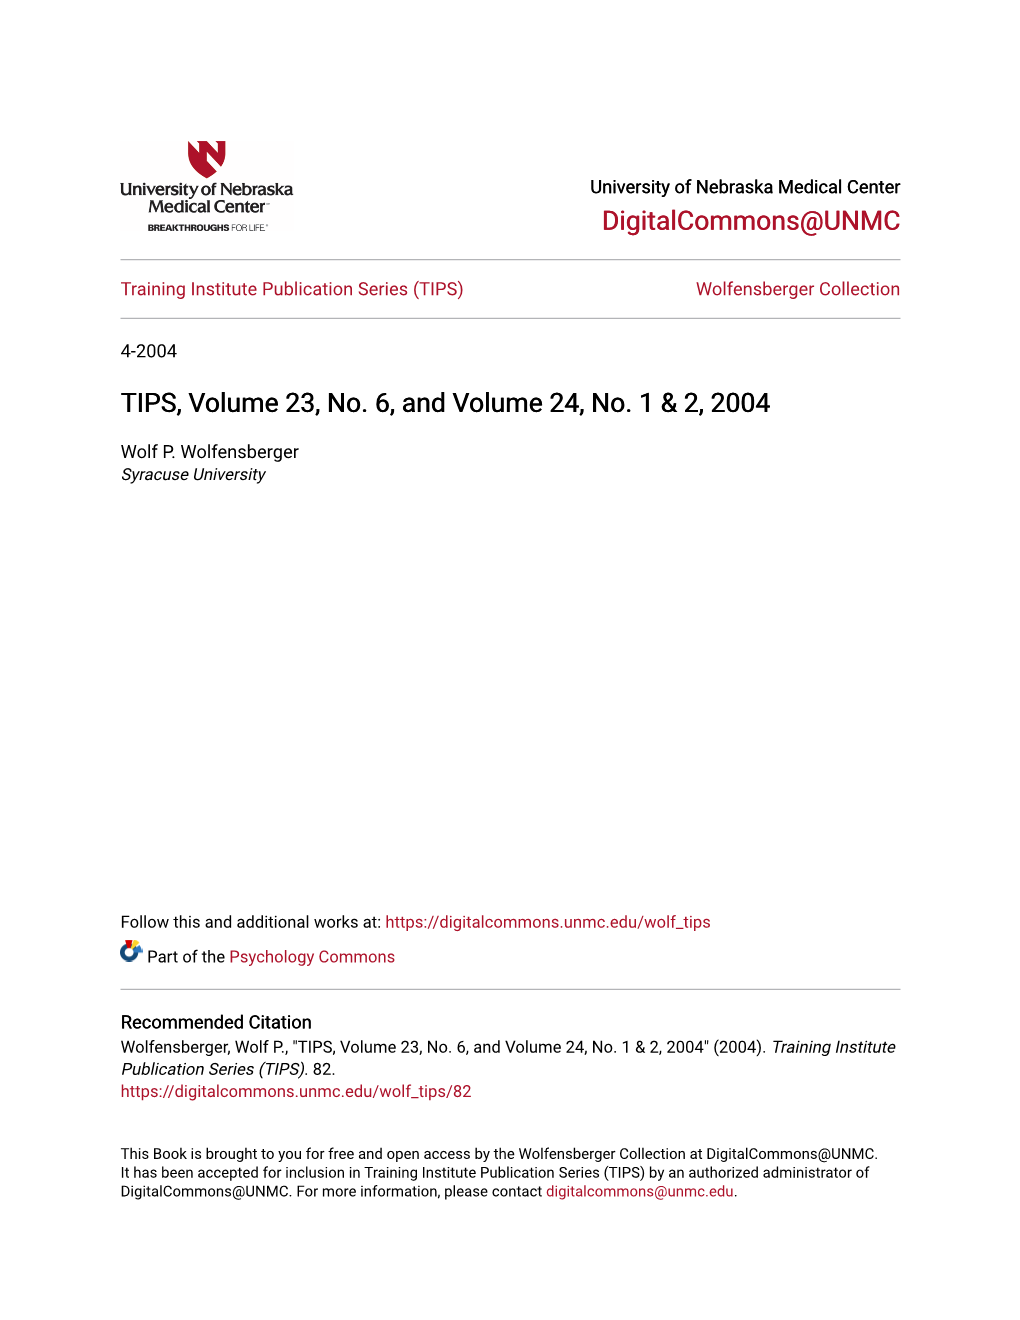 TIPS, Volume 23, No. 6, and Volume 24, No. 1 & 2, 2004